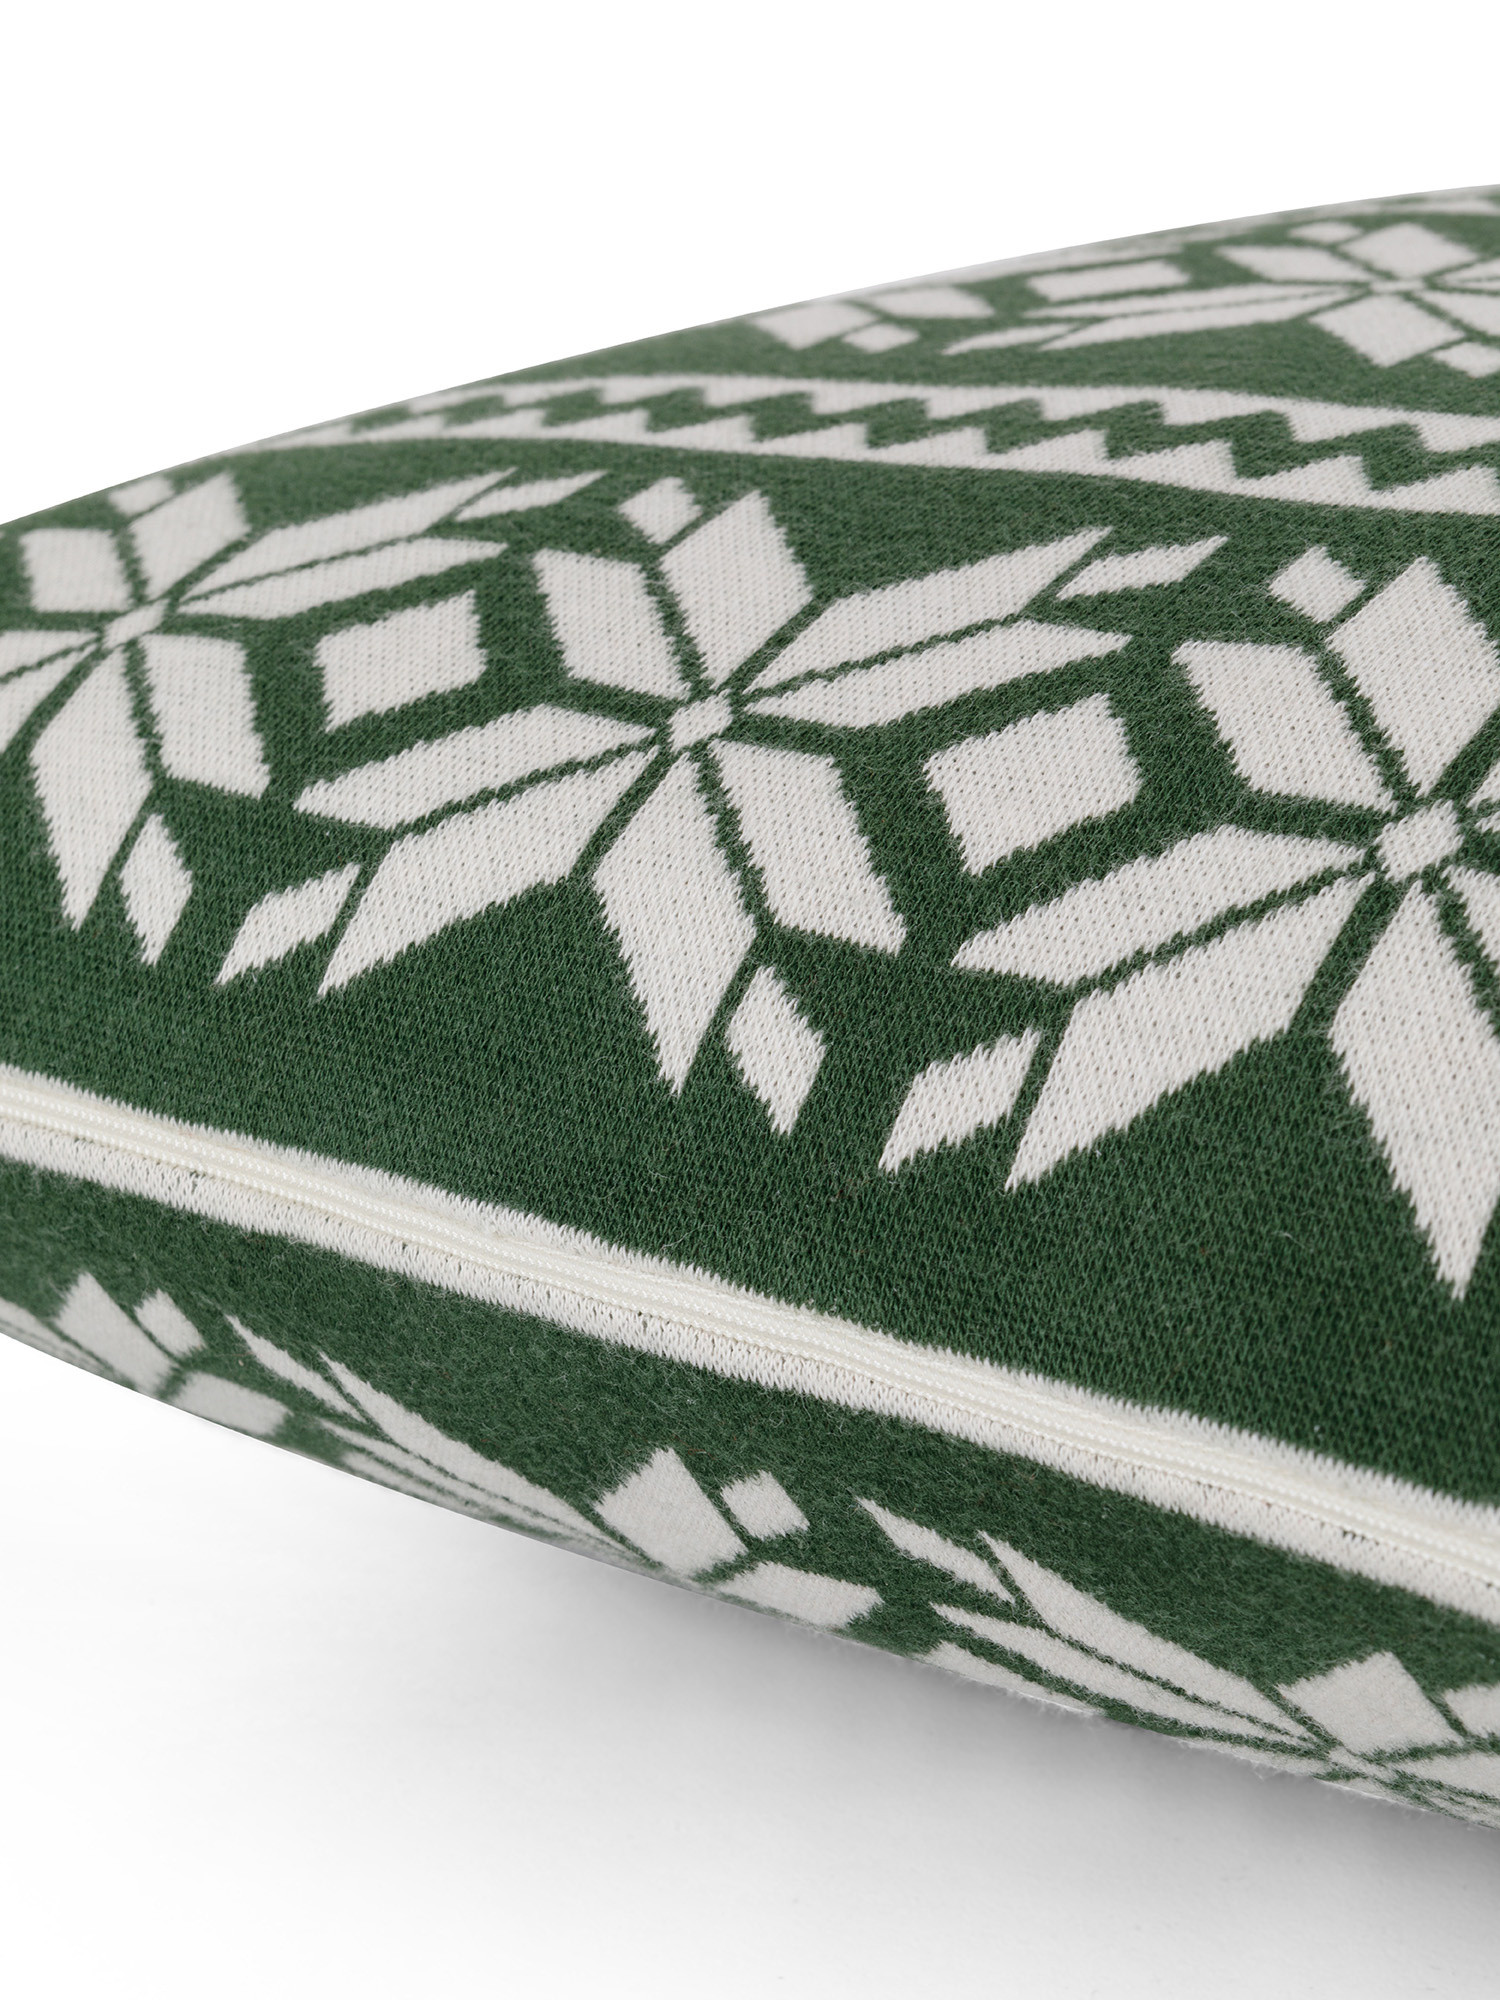 Cuscino in maglia jacquard motivo geometrico 45x45 cm, Verde, large image number 2